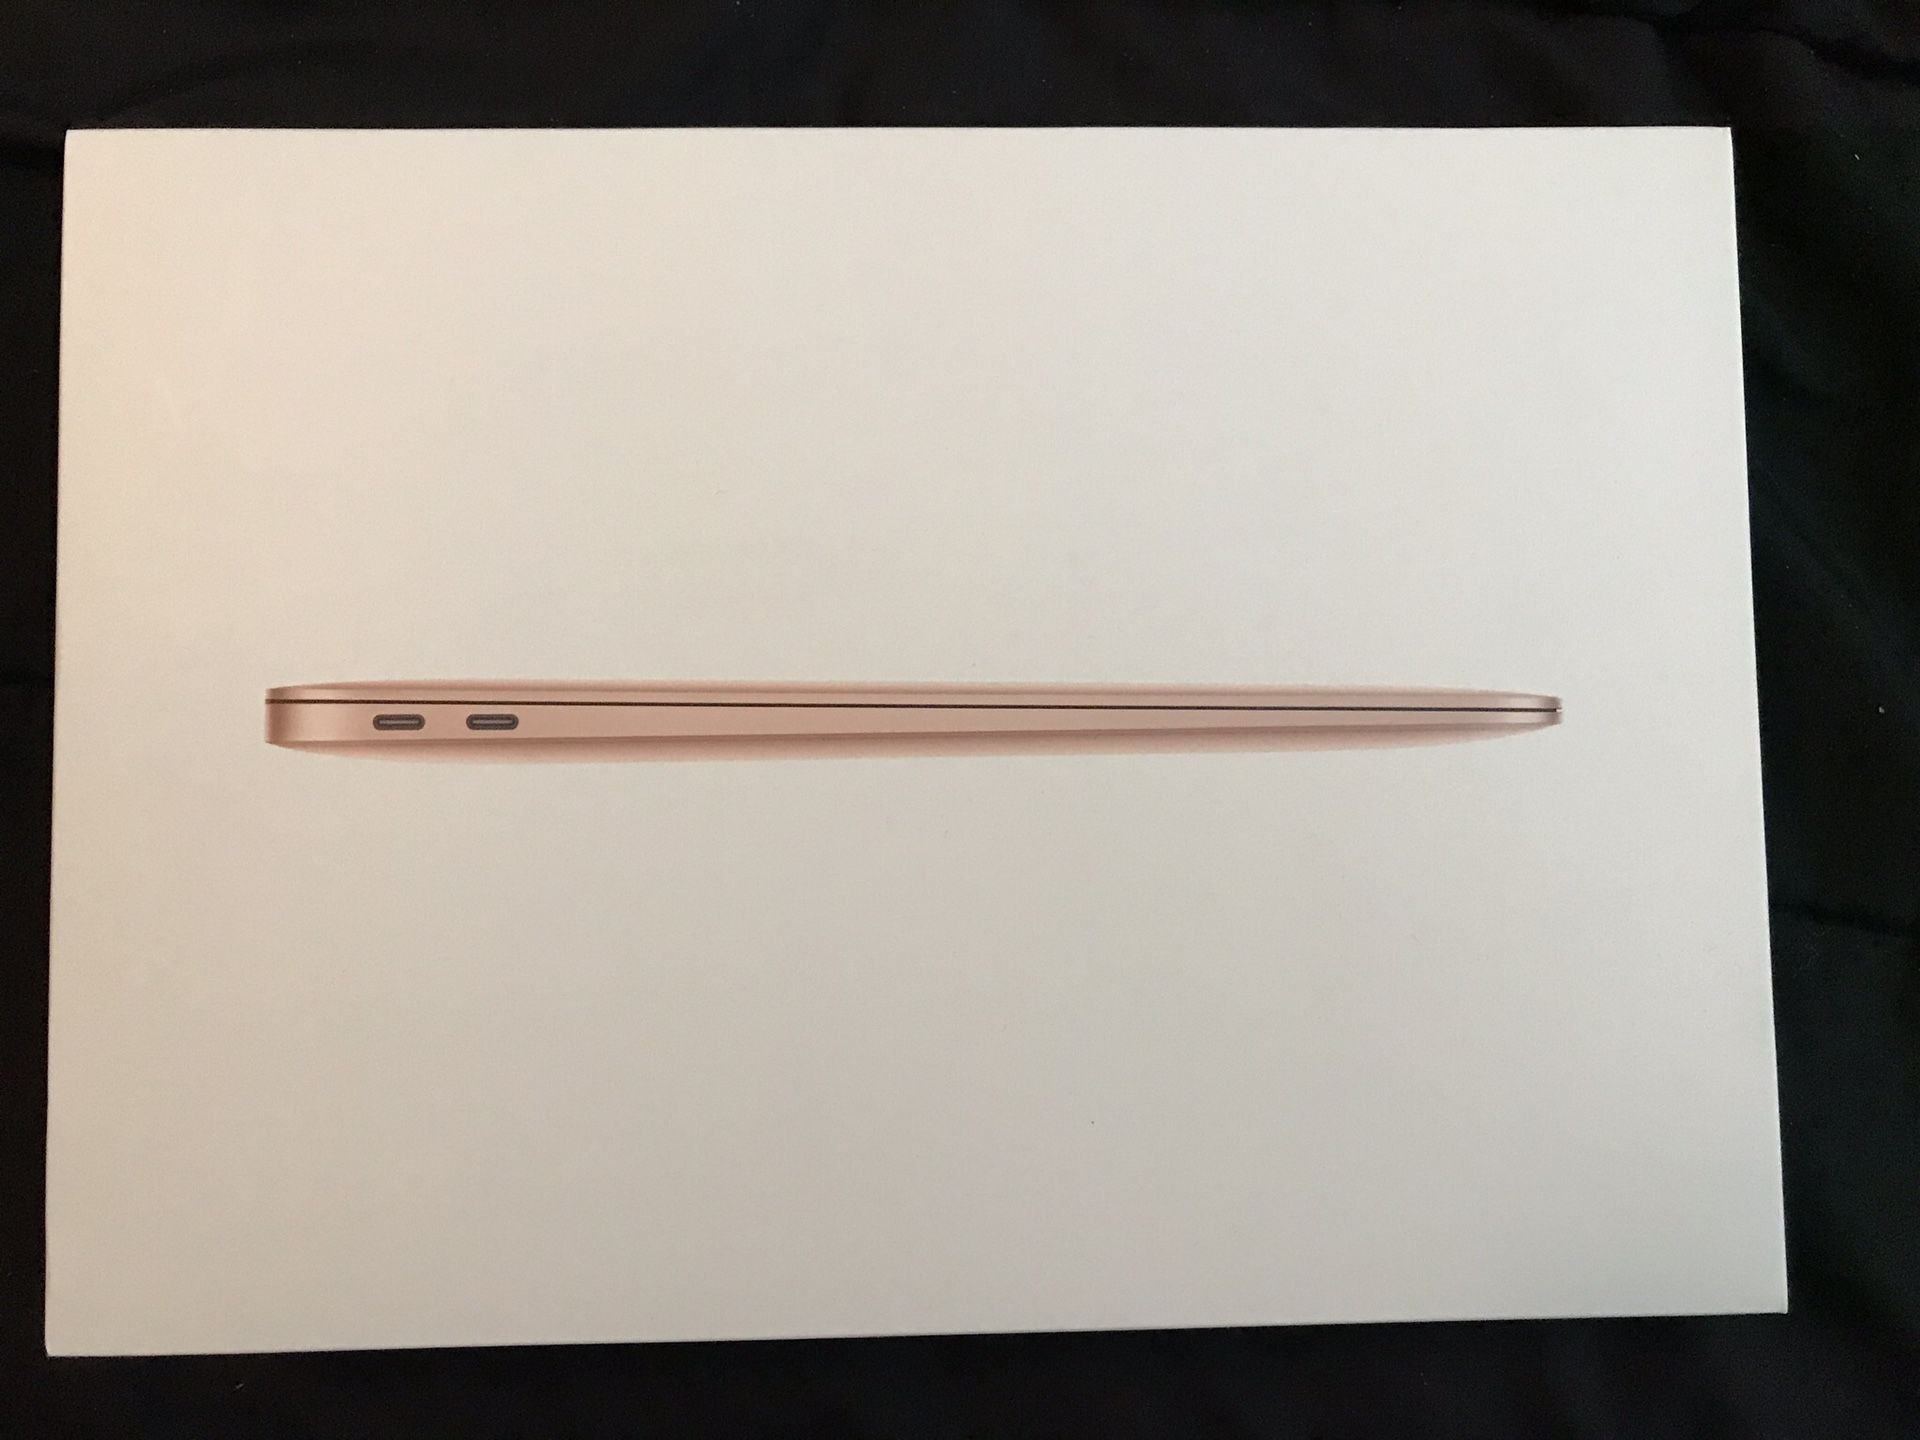 Brand new MacBook Air 2019